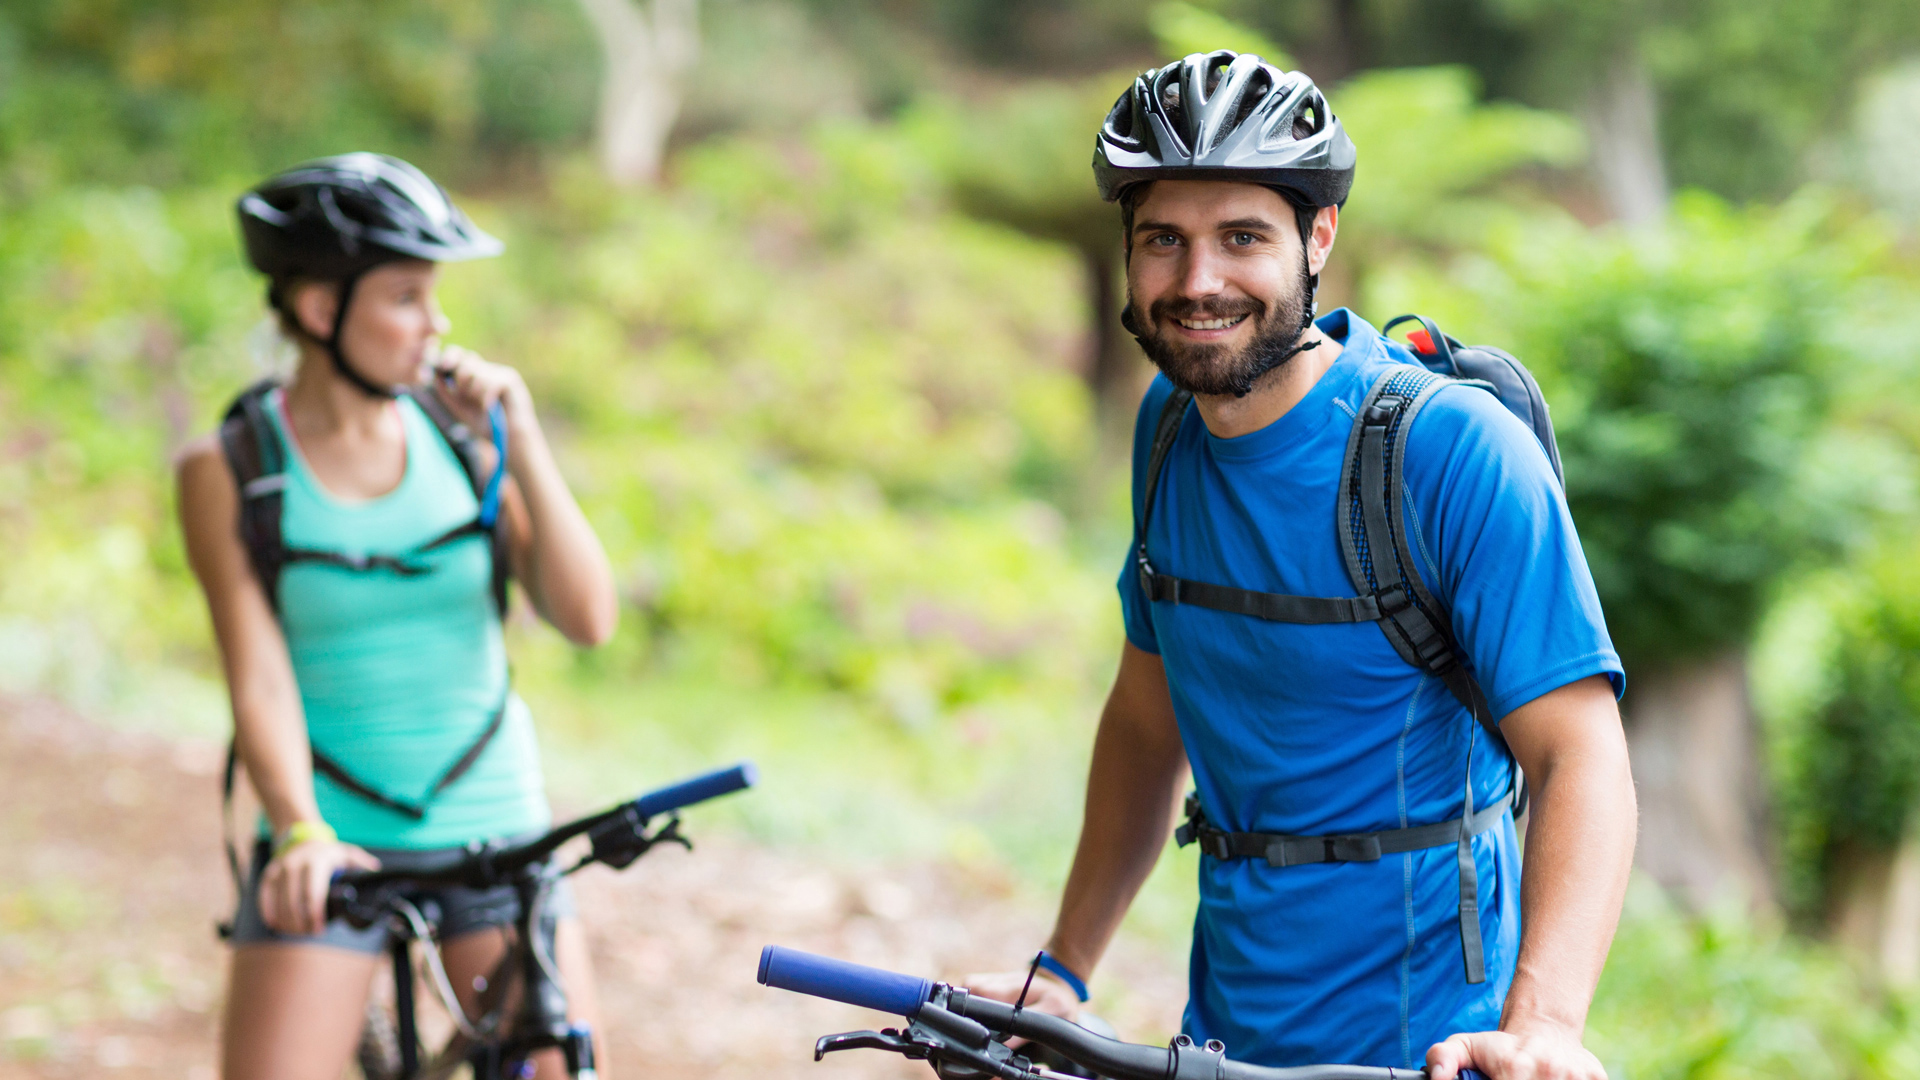 Man smiling with bike helmet